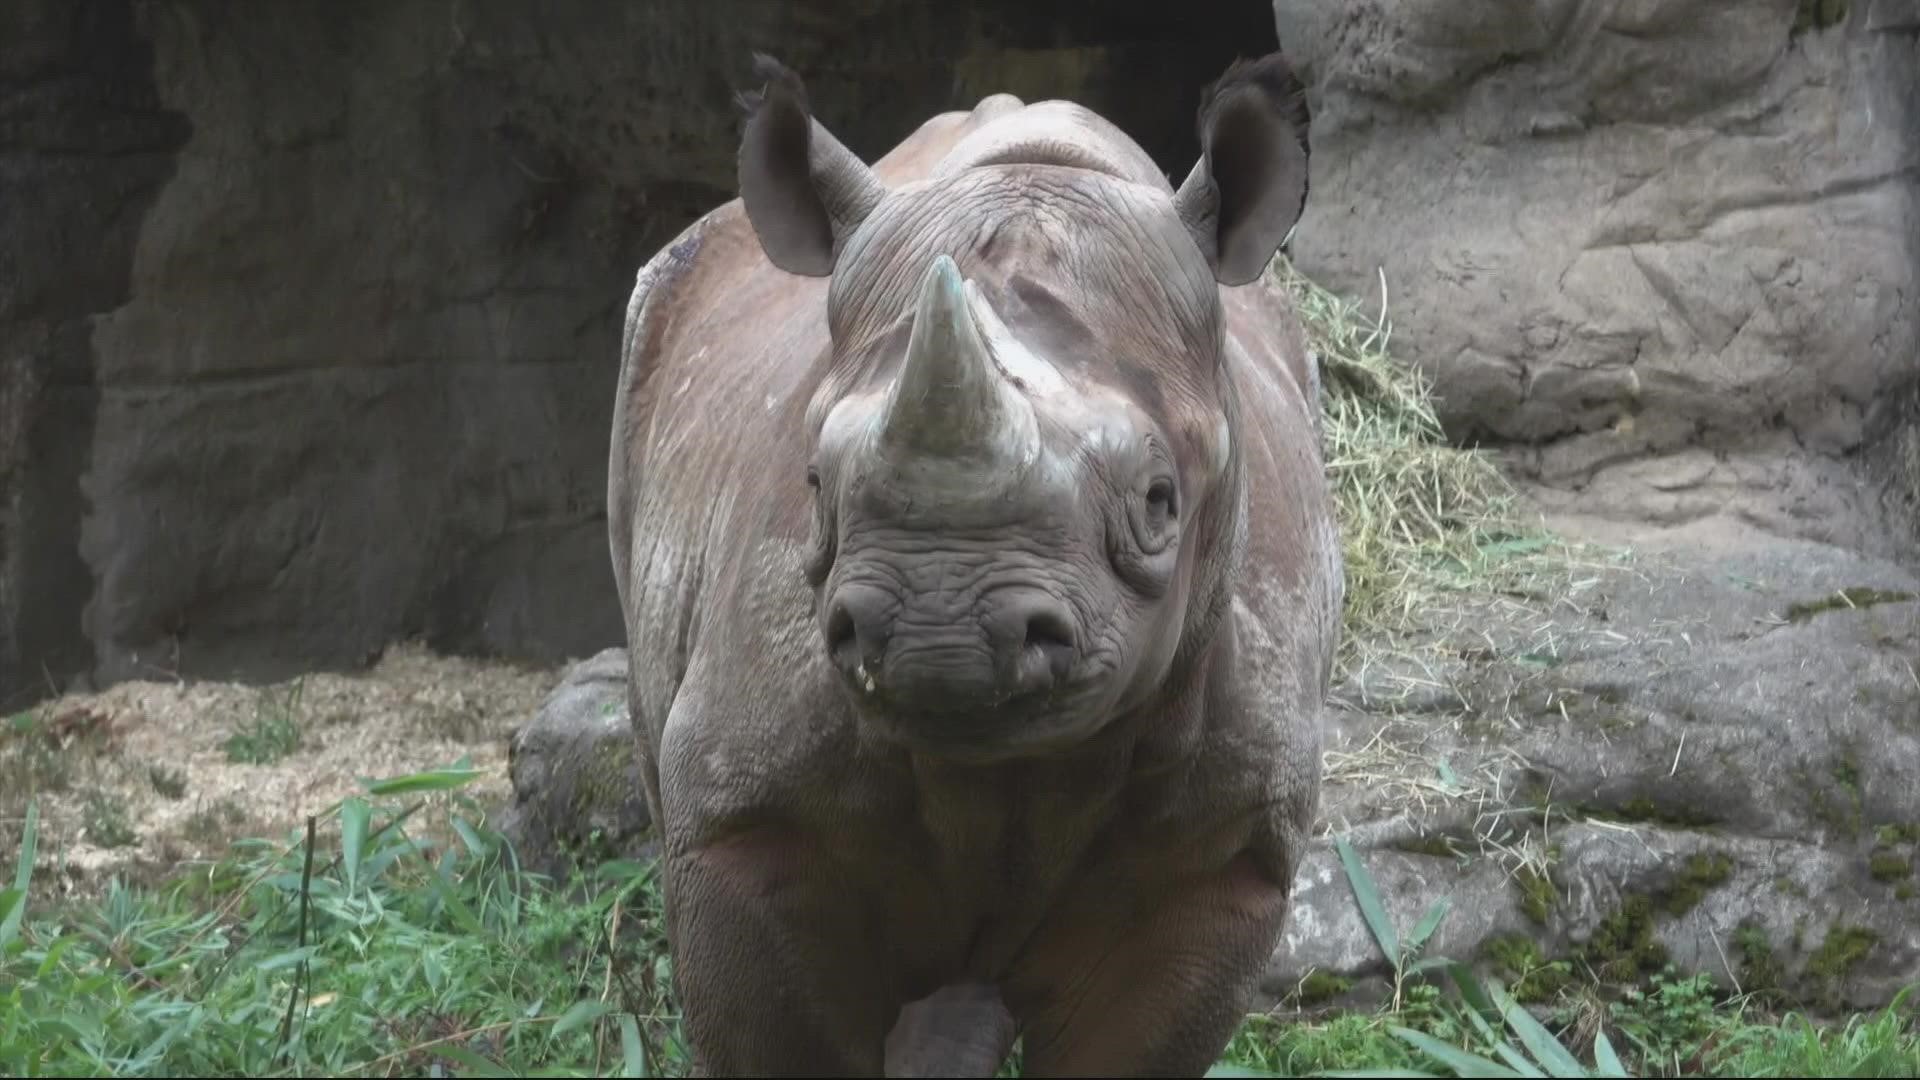 Drew Carney got to meet the first official resident of the Oregon Zoo's new rhinoceros habitat called Rhino Ridge. Meet King the Rhino!